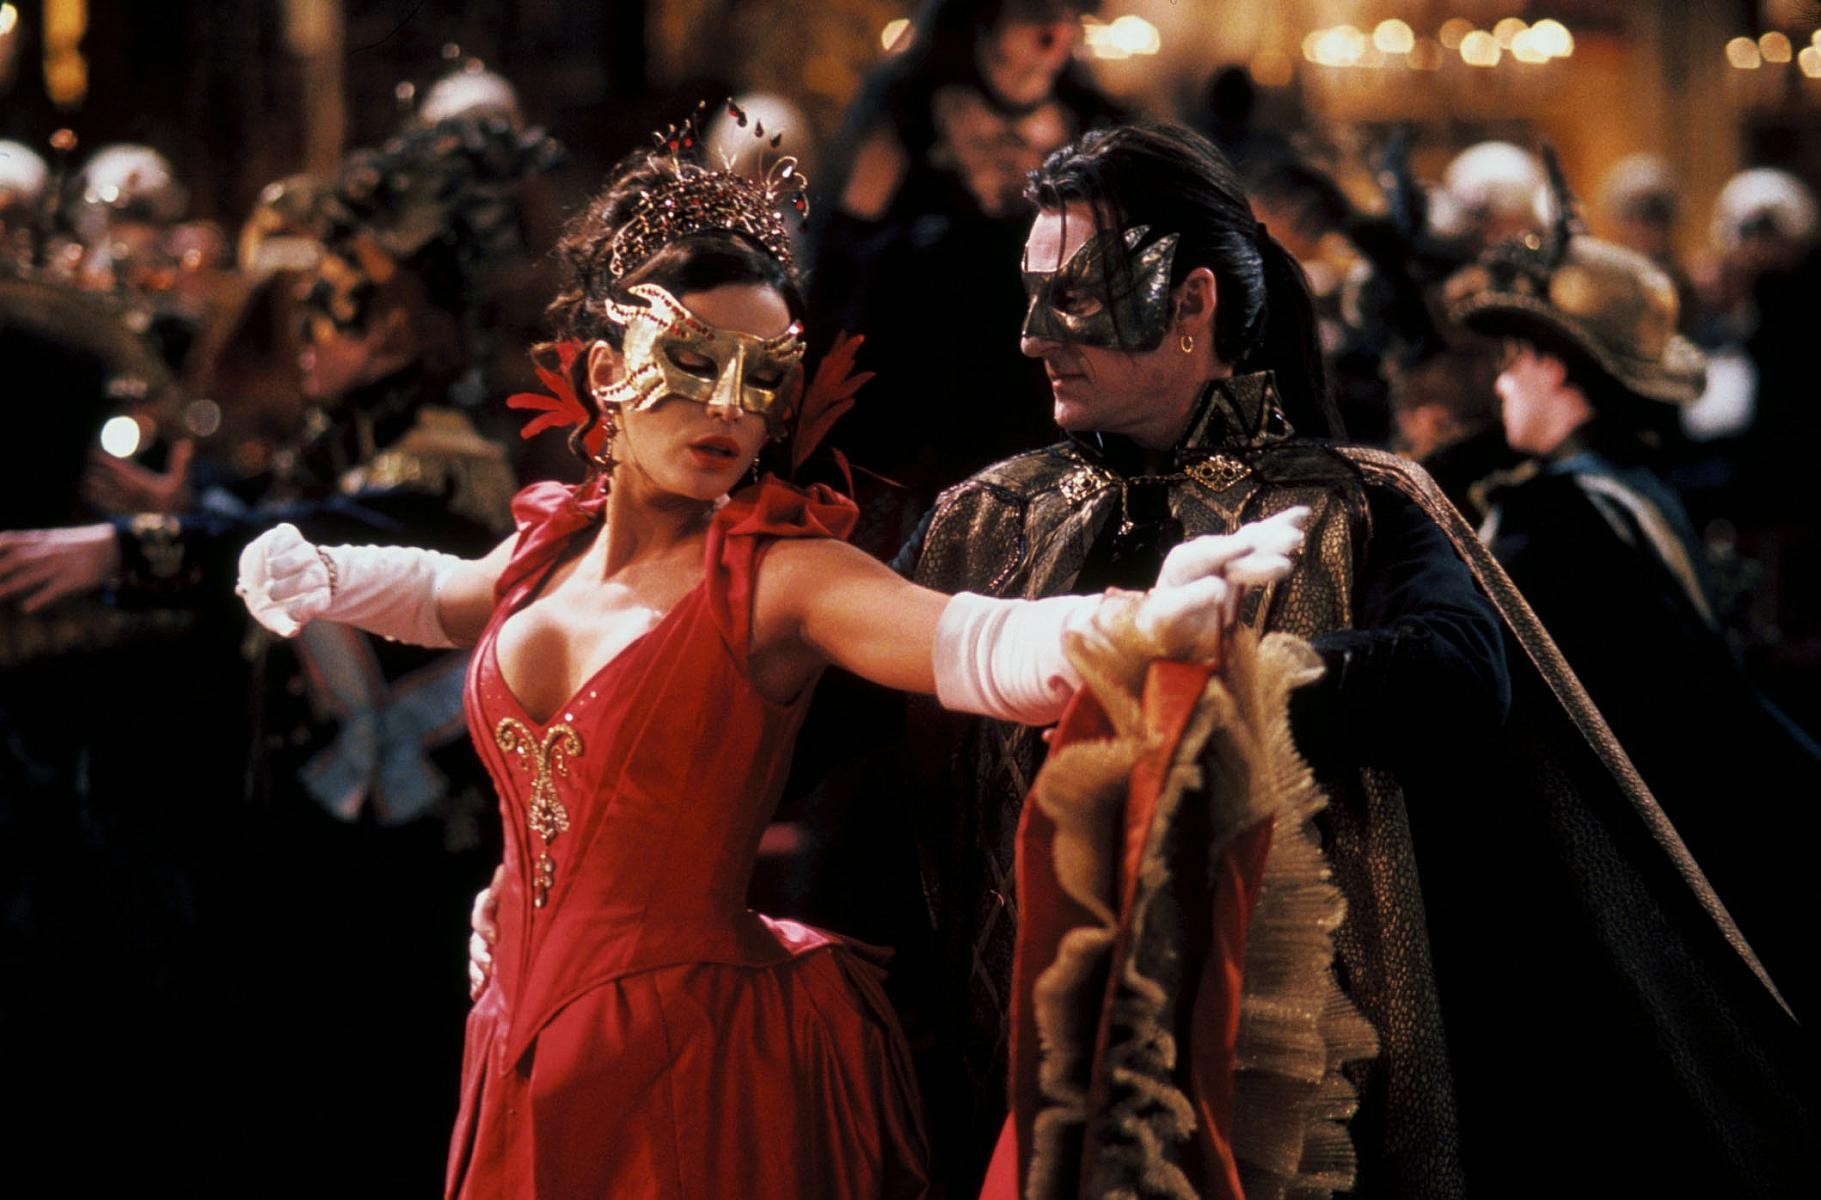 General 1821x1200 movies Van Helsing Princess Anna Kate Beckinsale Dracula vampires mask film stills boobs dress red dress actor actress dancing